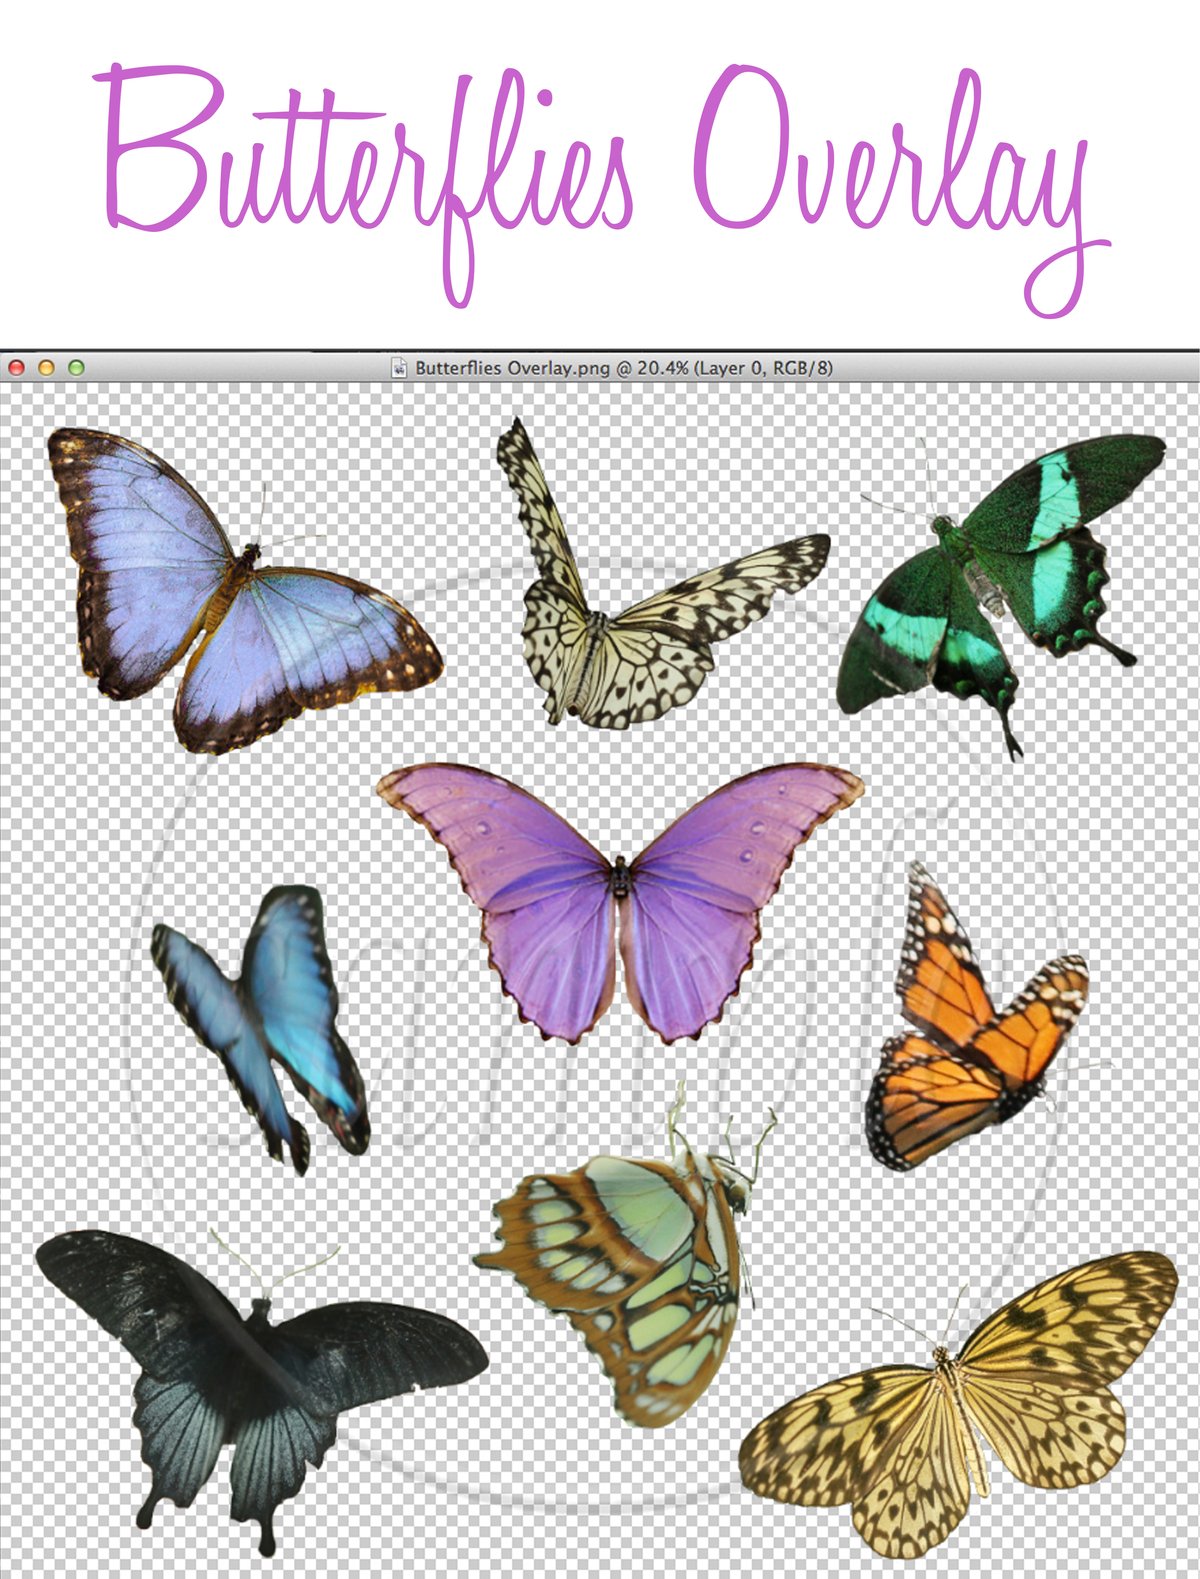 Image of Butterflies Overlay